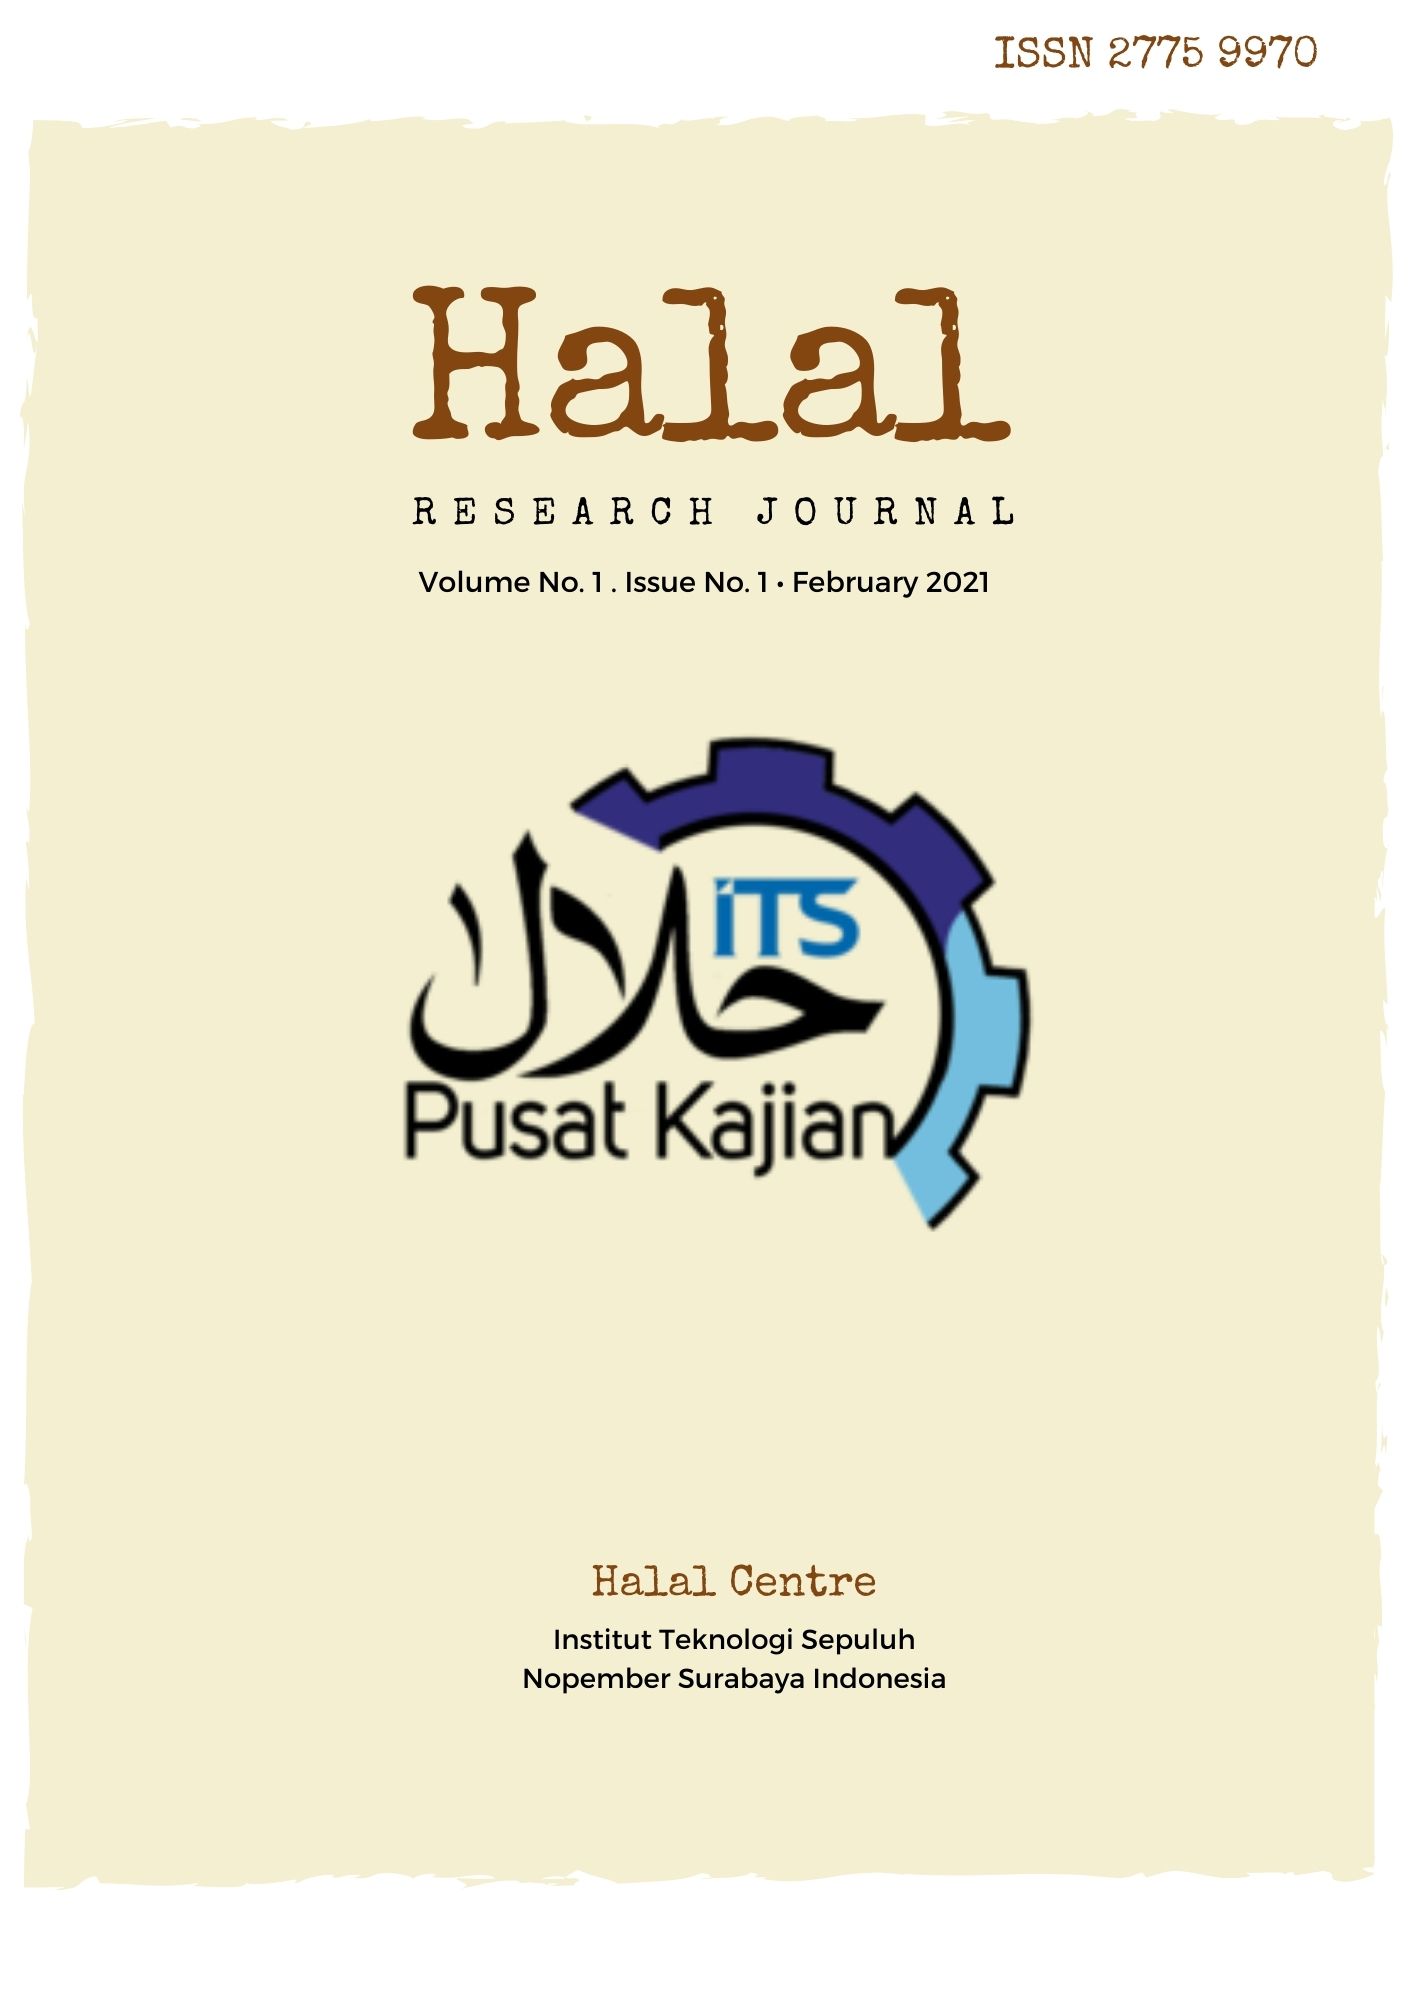 Halal Research Journal